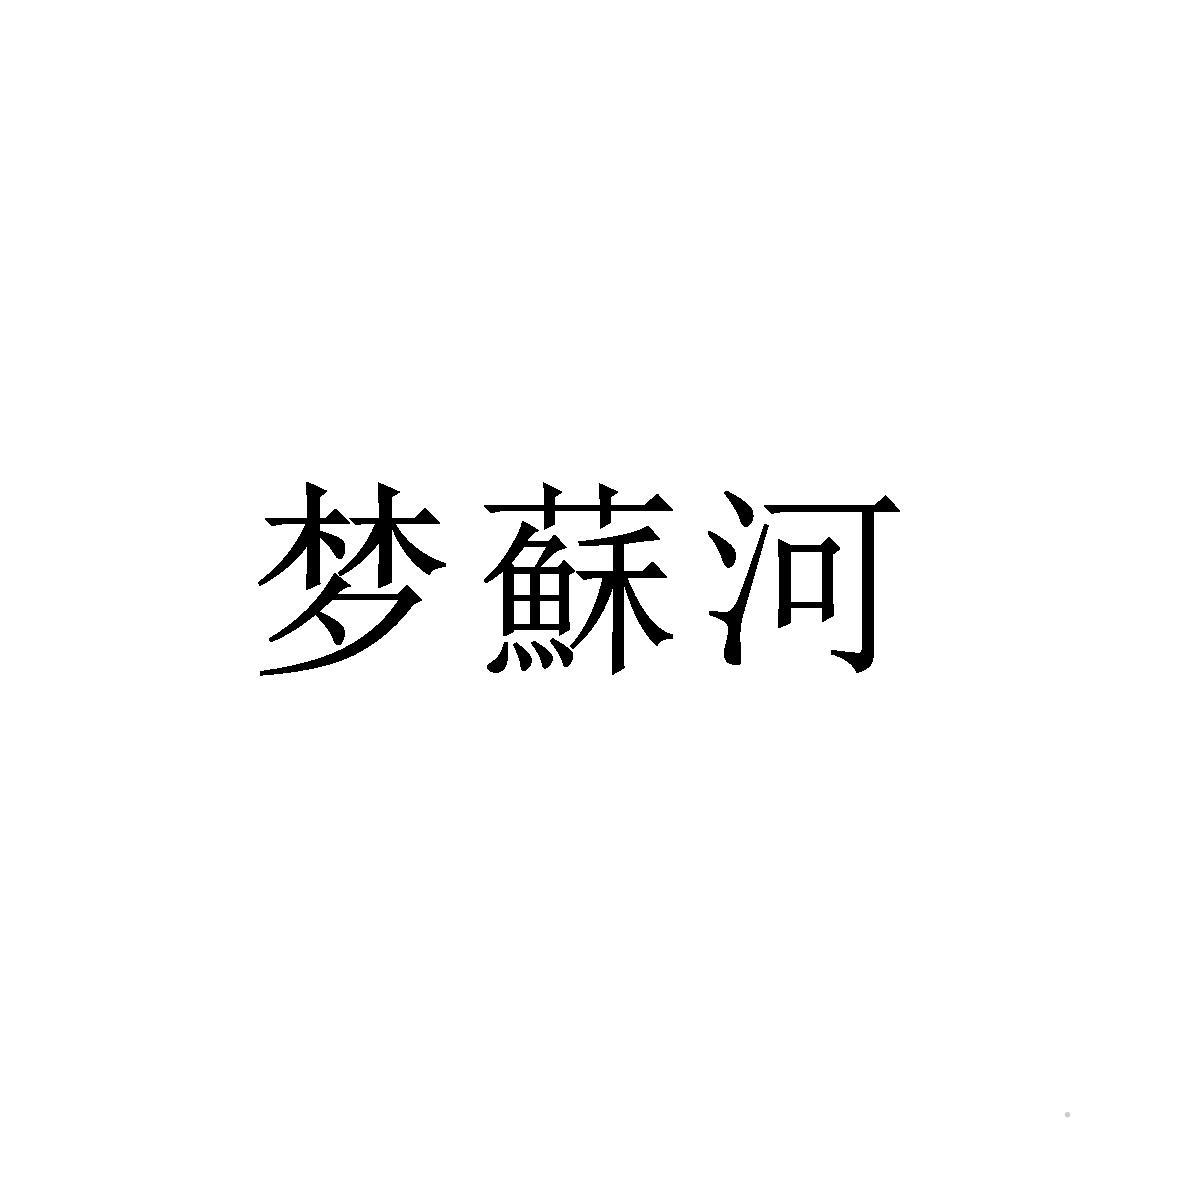 梦苏河logo